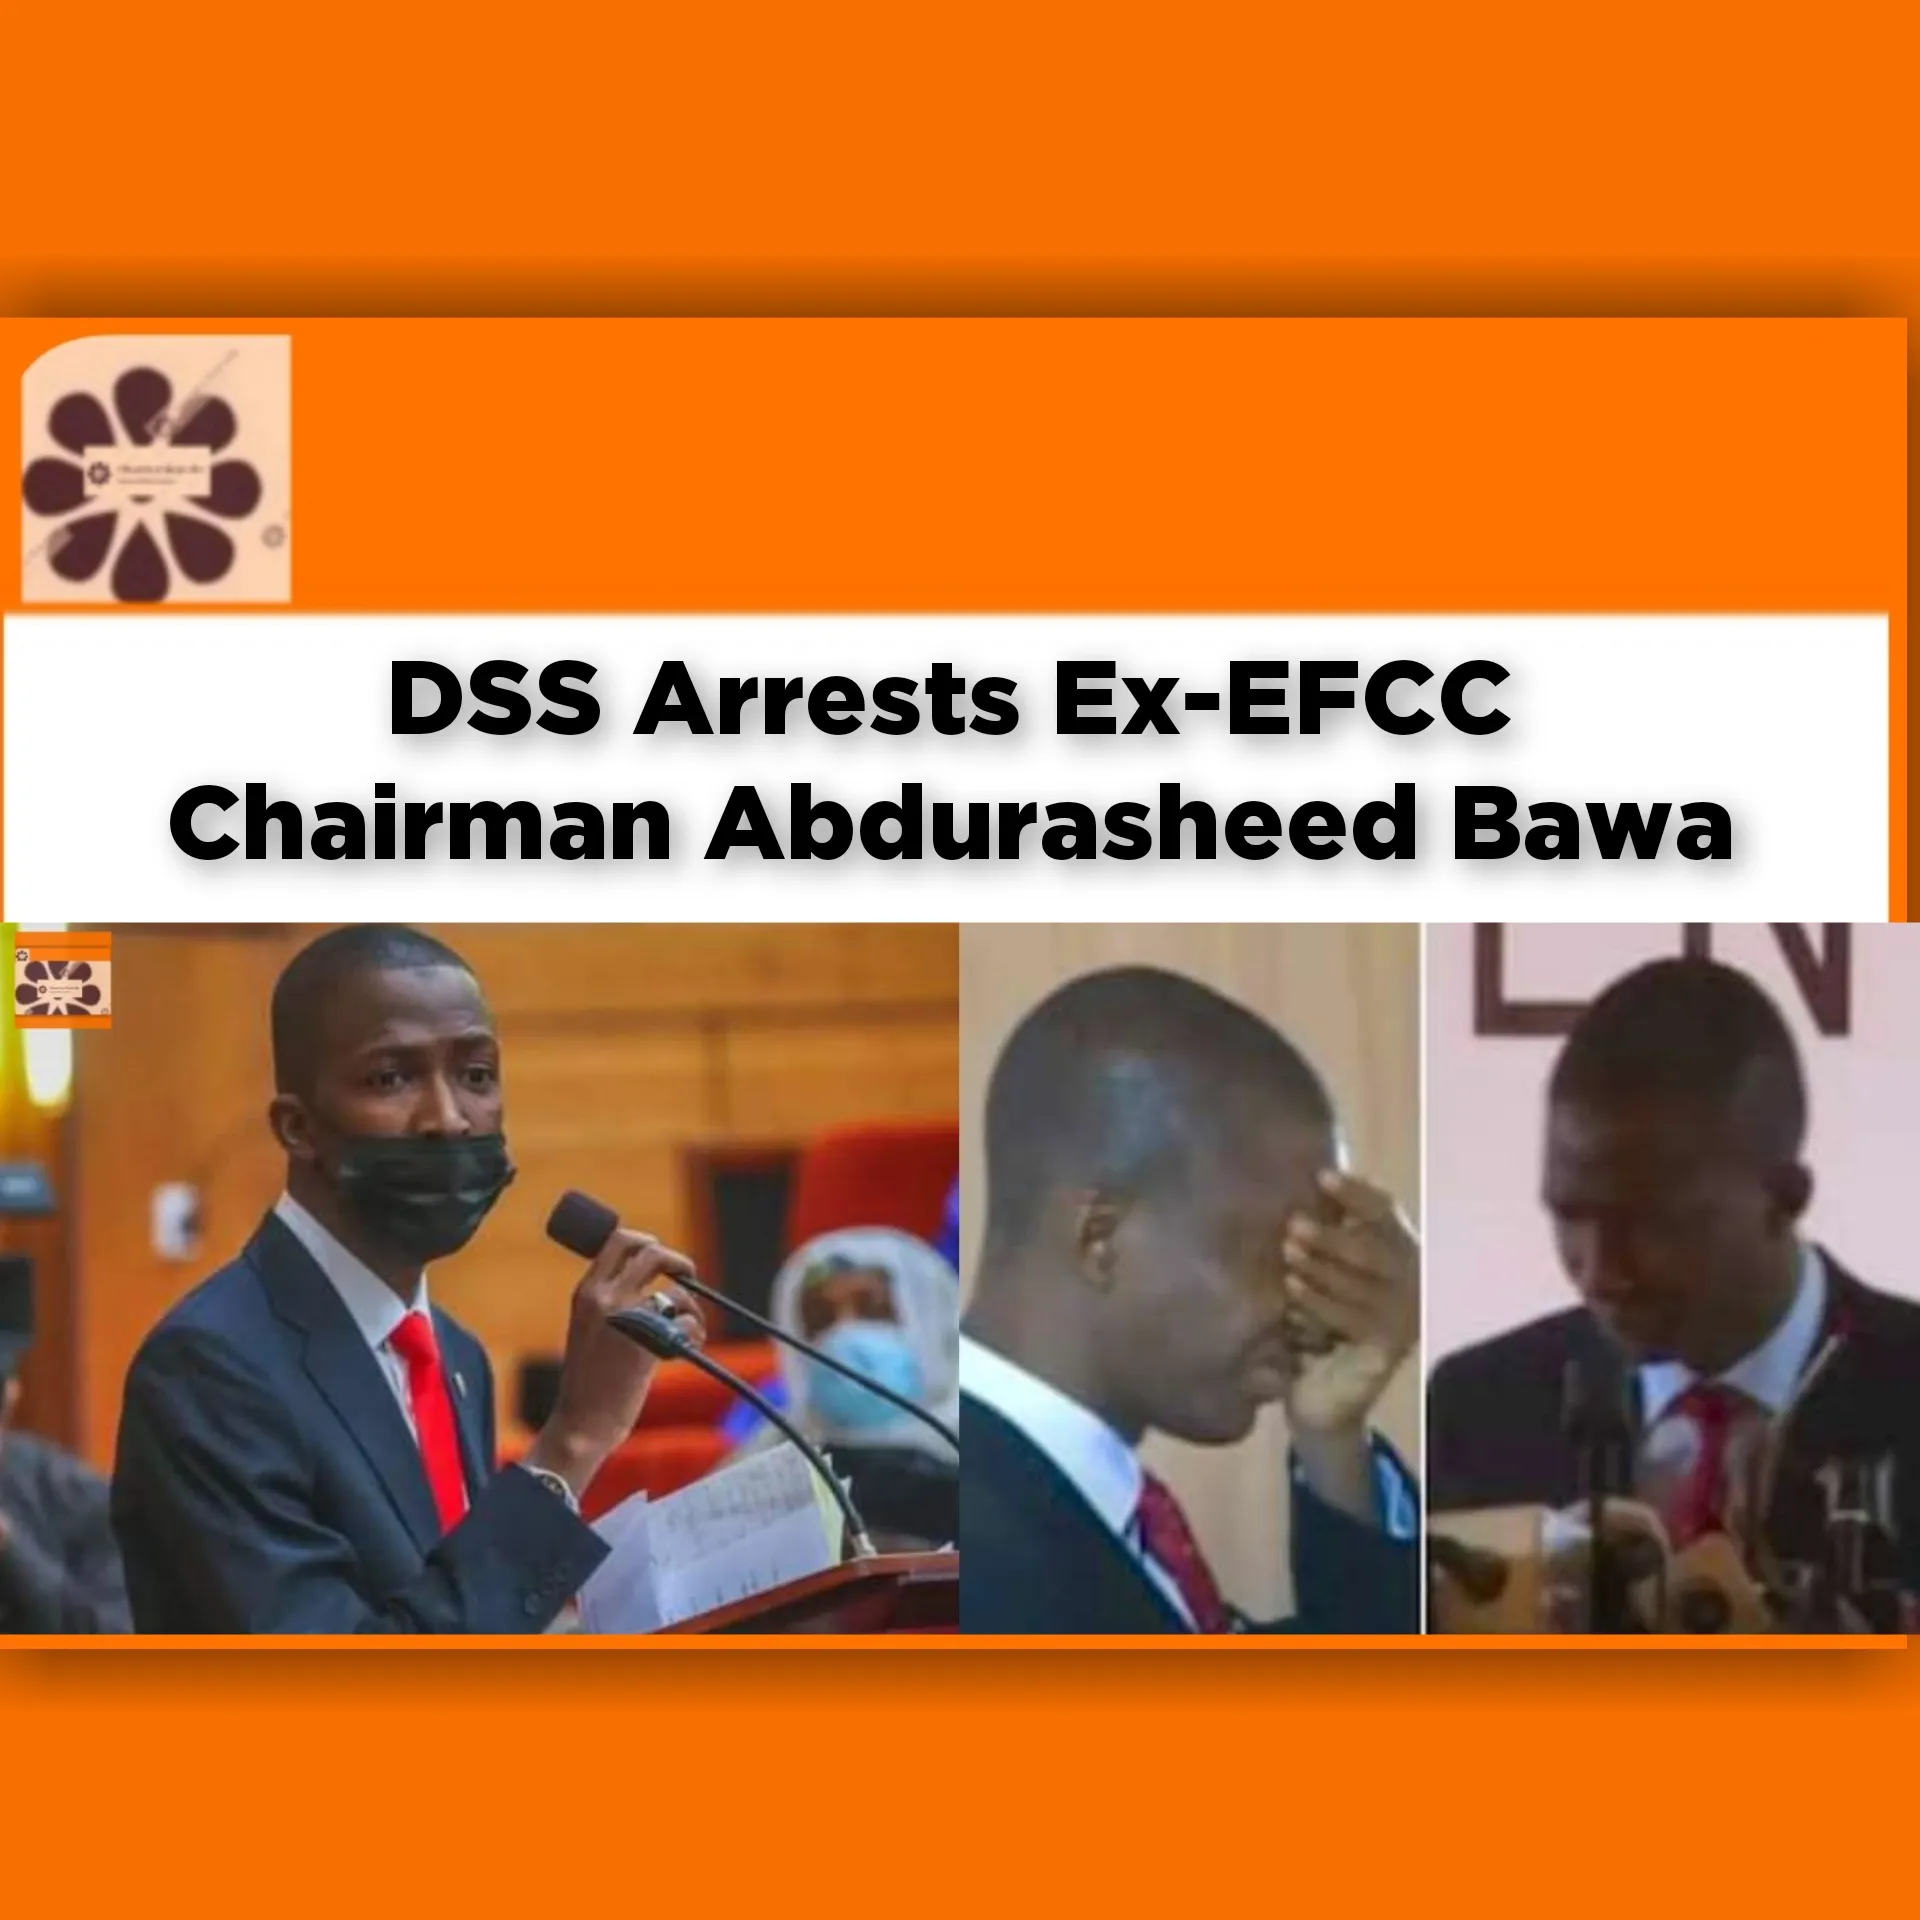 DSS Arrests Ex-EFCC Chairman Abdurasheed Bawa ~ OsazuwaAkonedo #Abdulrasheed #Bawa #Bola #Dss #EFCC #Tinubu